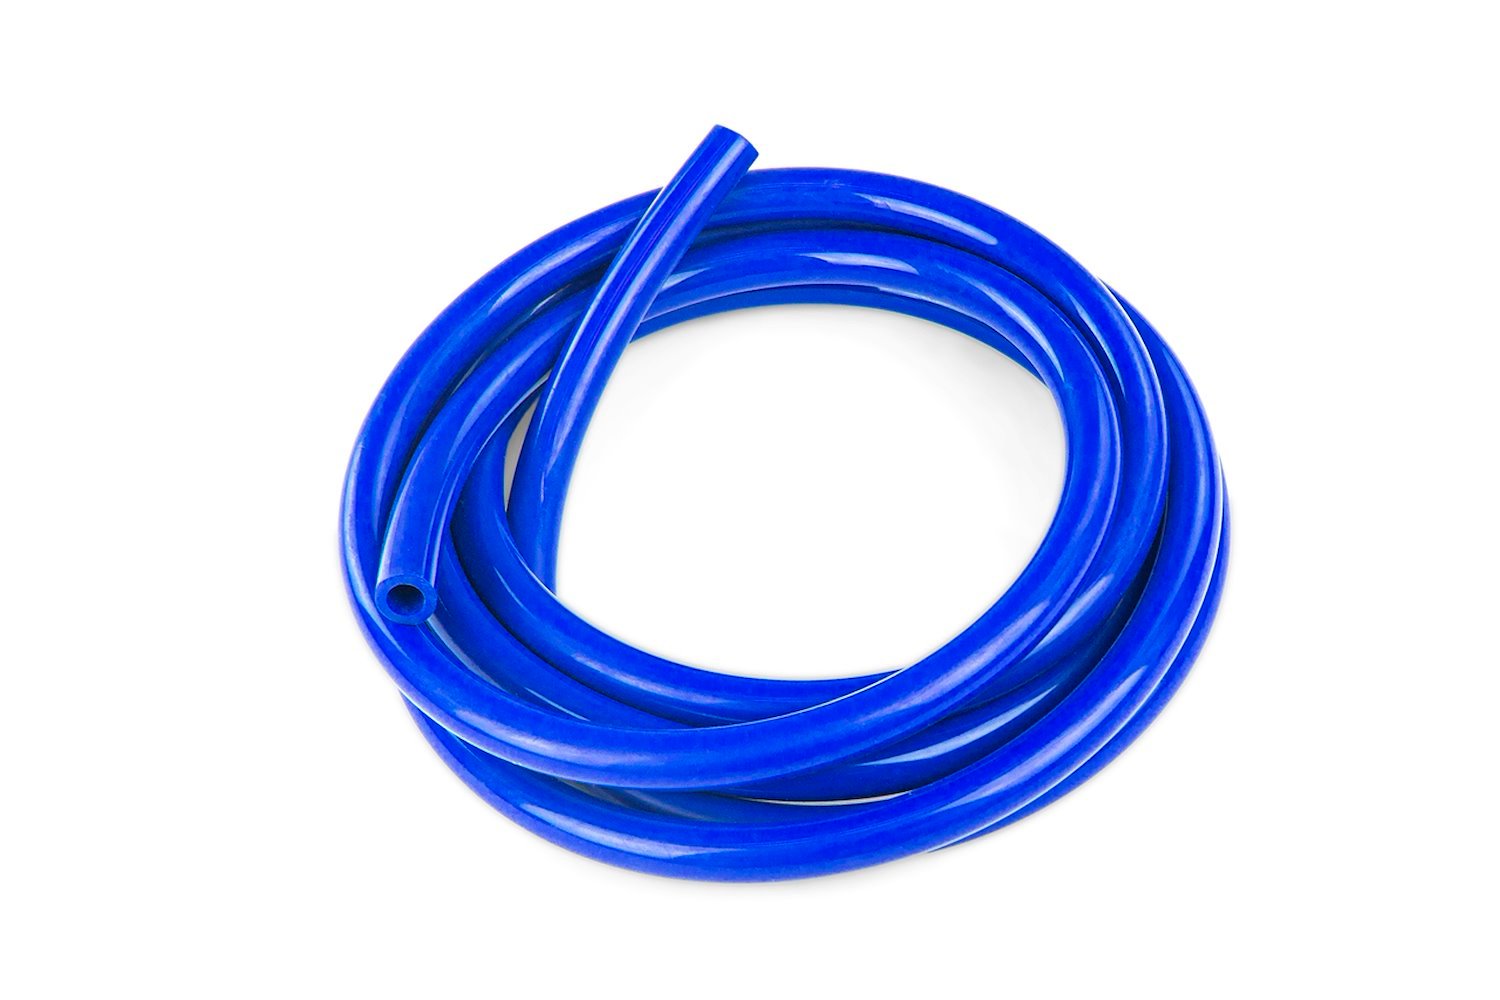 HTSVH95-BLUEx5 High-Temperature Silicone Vacuum Hose Tubing, 3/8 in. ID, 5 ft. Roll, Blue